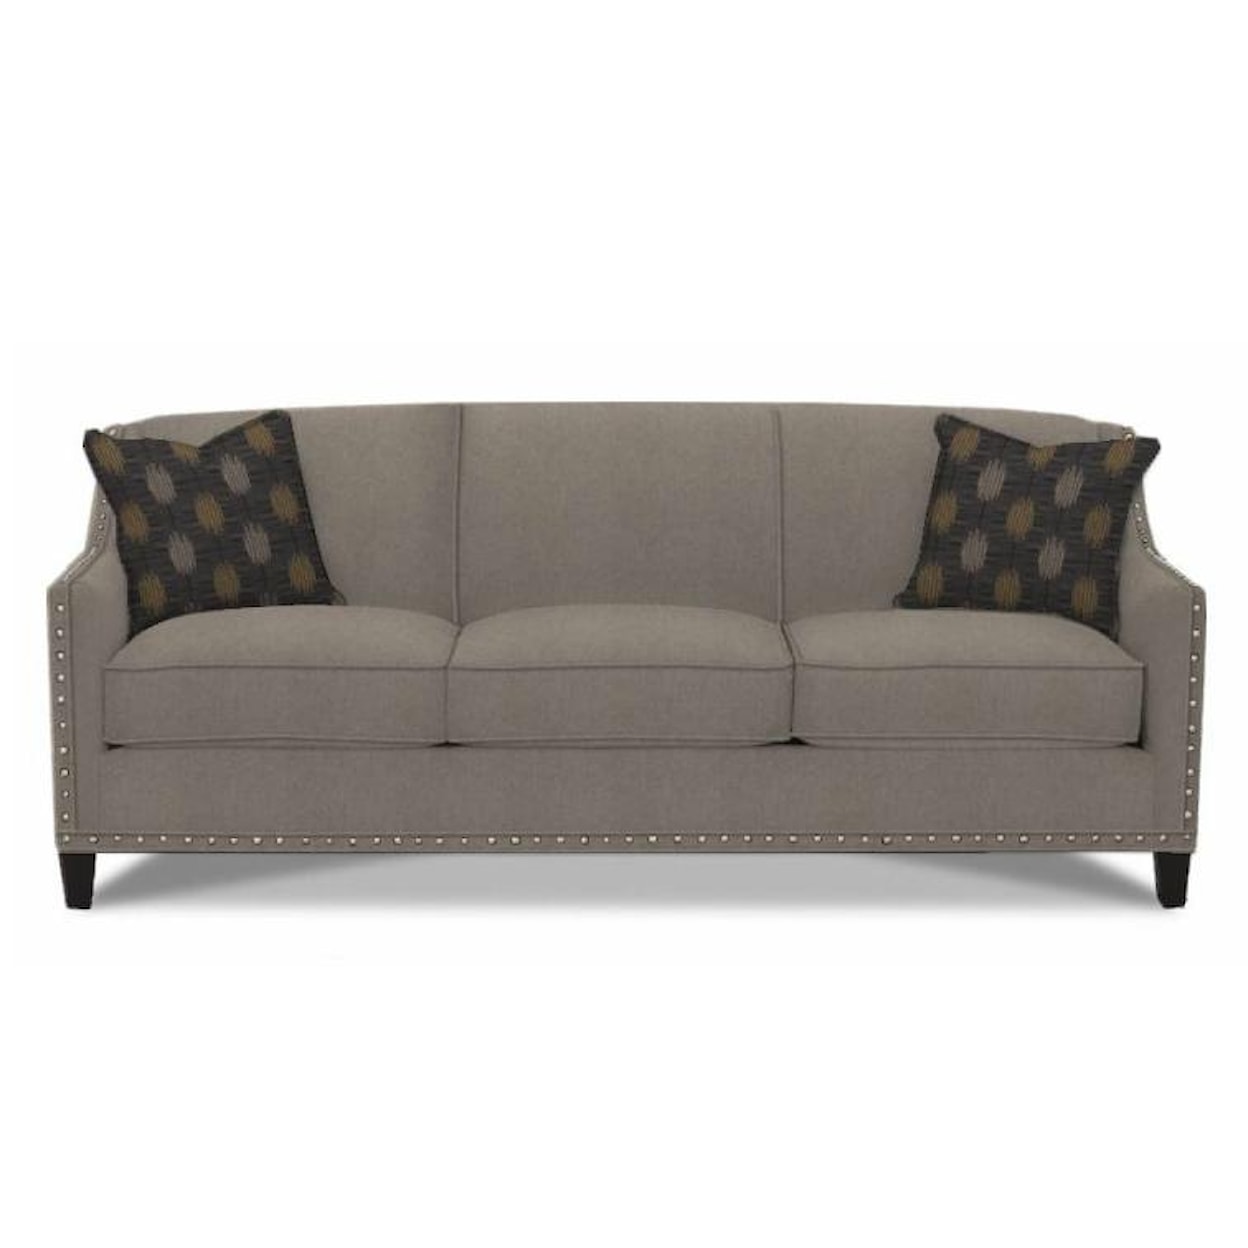 Rowe Rockford Rockford Upholstered Sofa